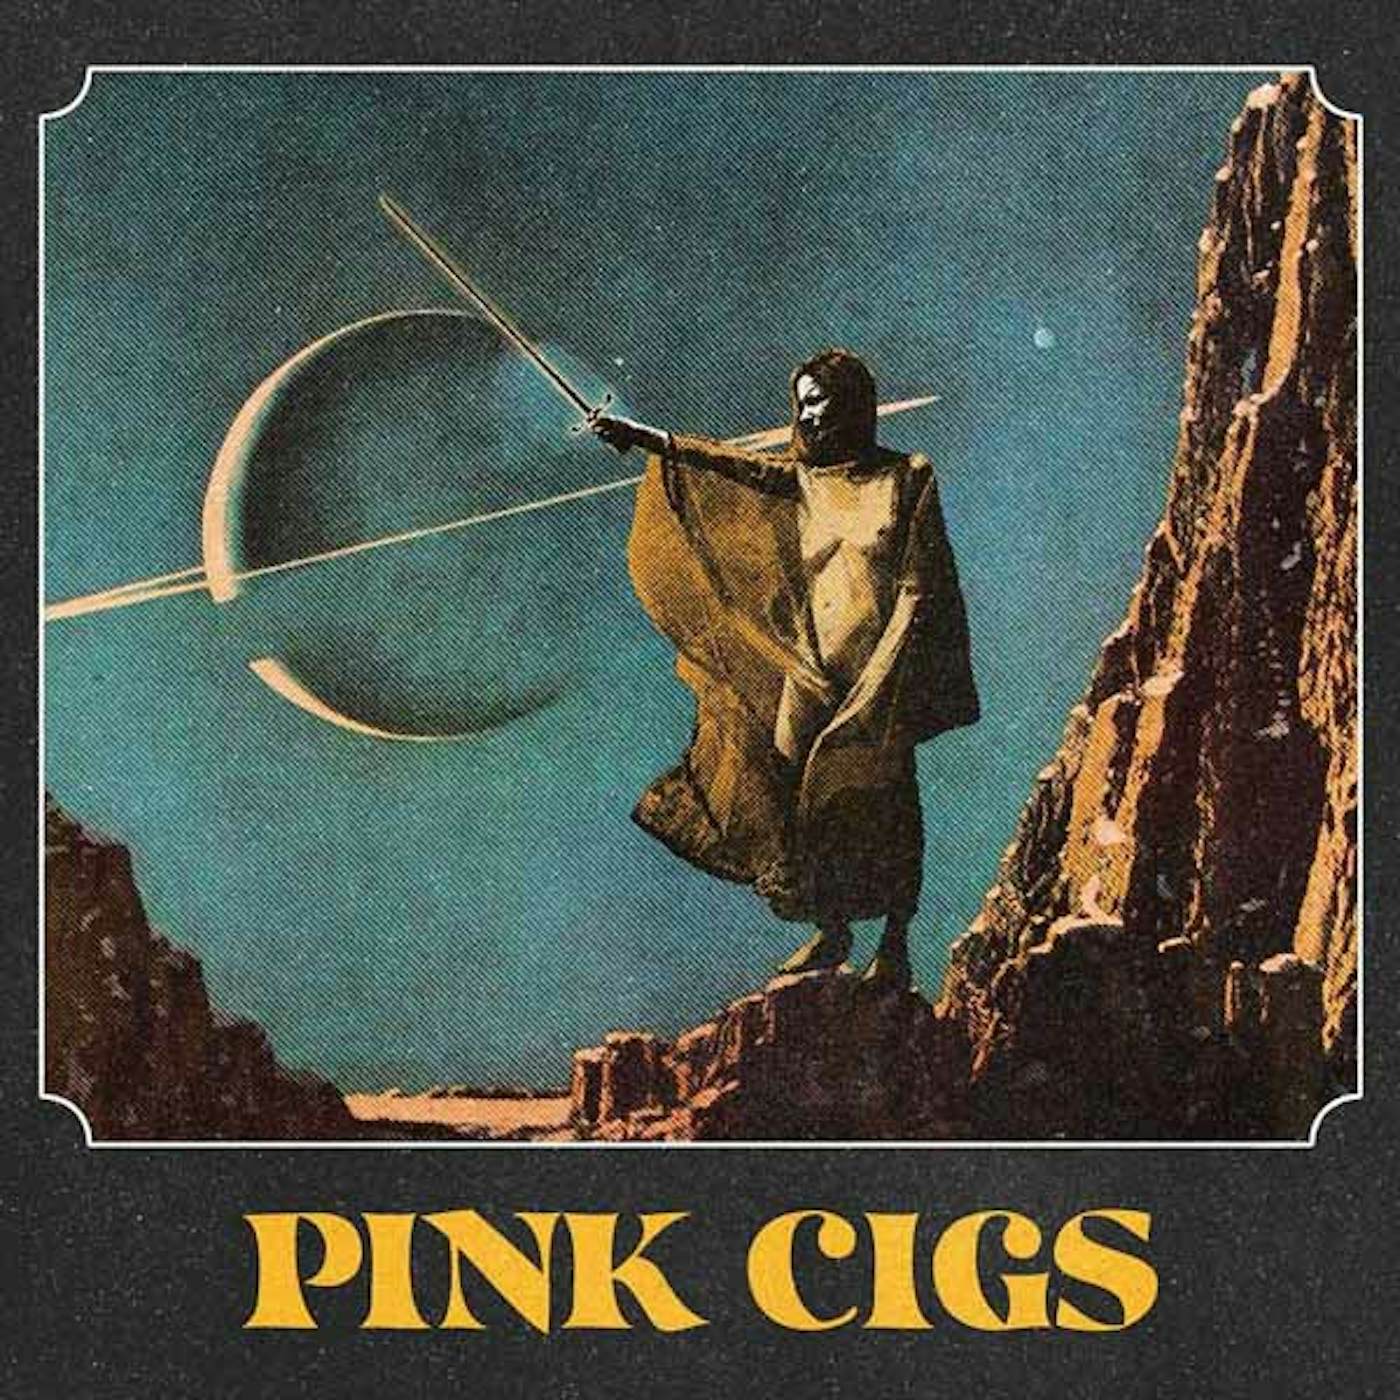 Pink Cigs LP - Pink Cigs (Coloured Vinyl)